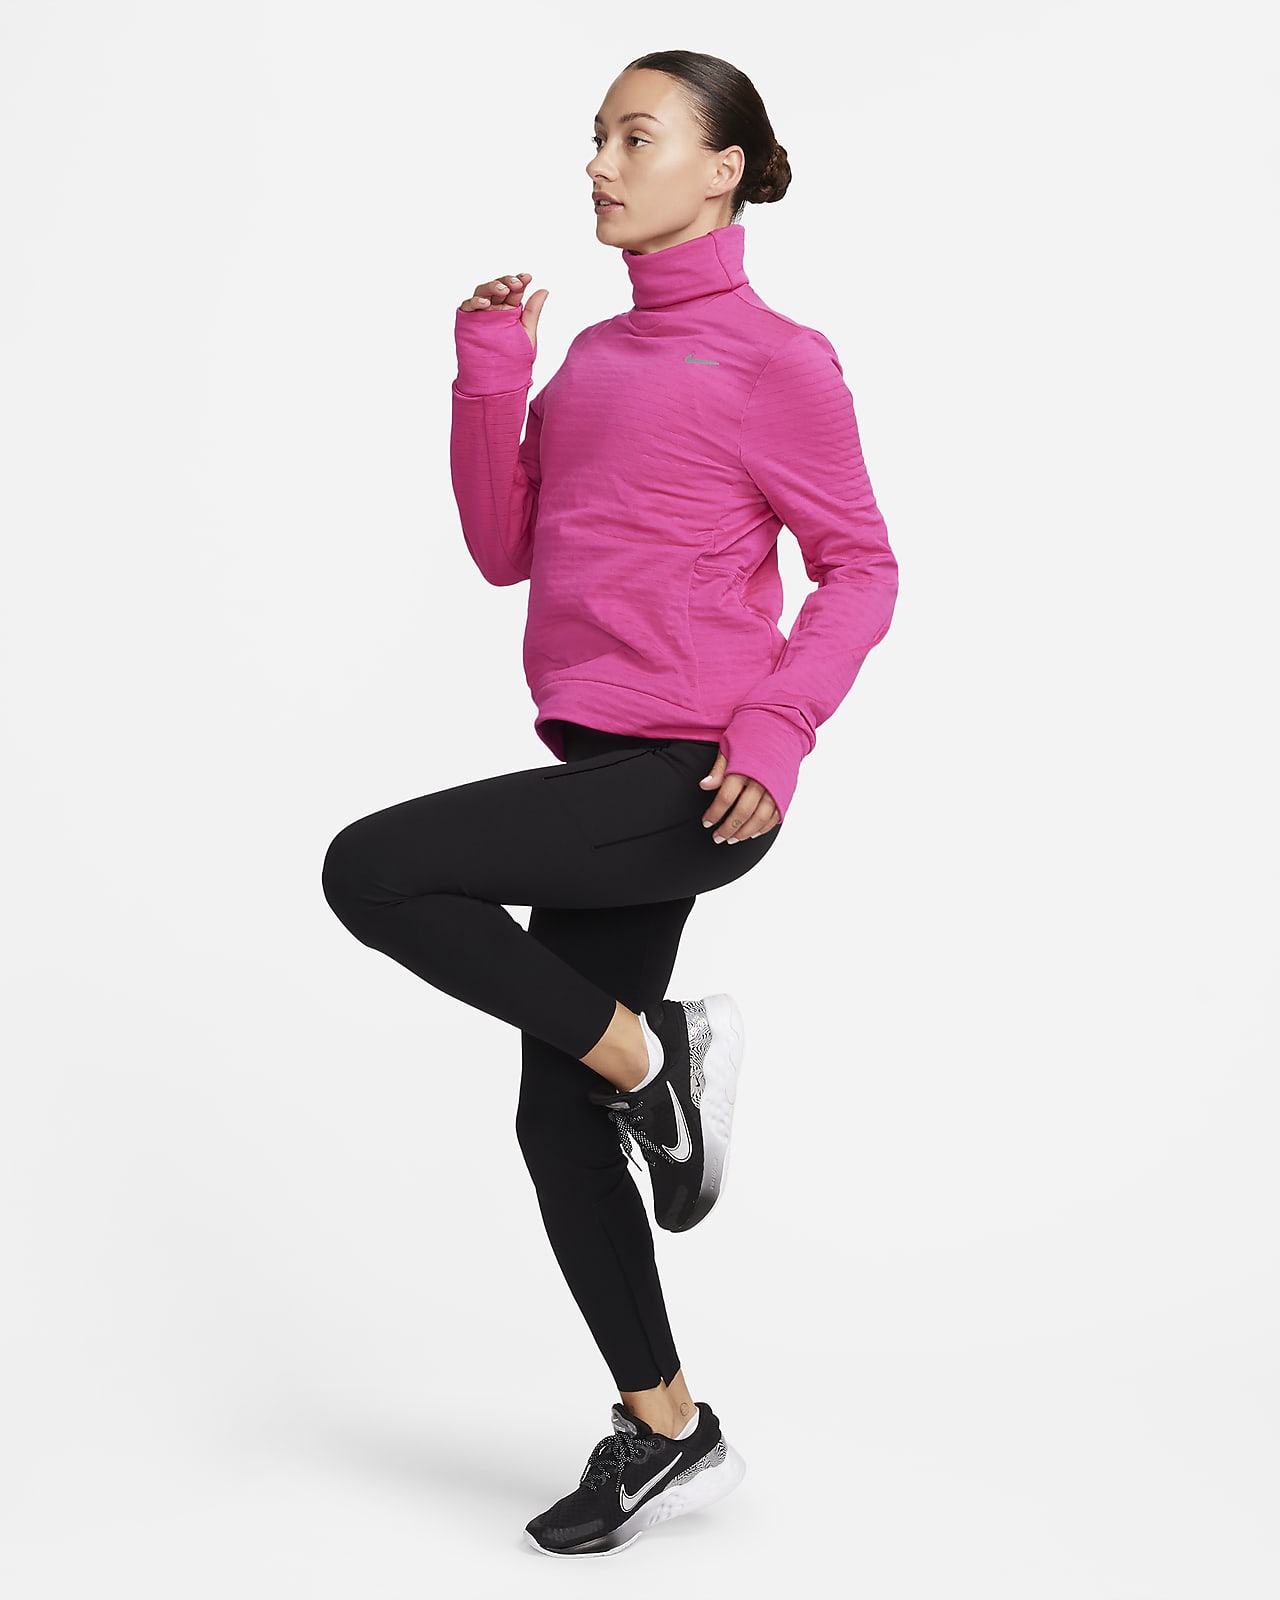 Nike Therma-FIT Swift Women's Running Vest